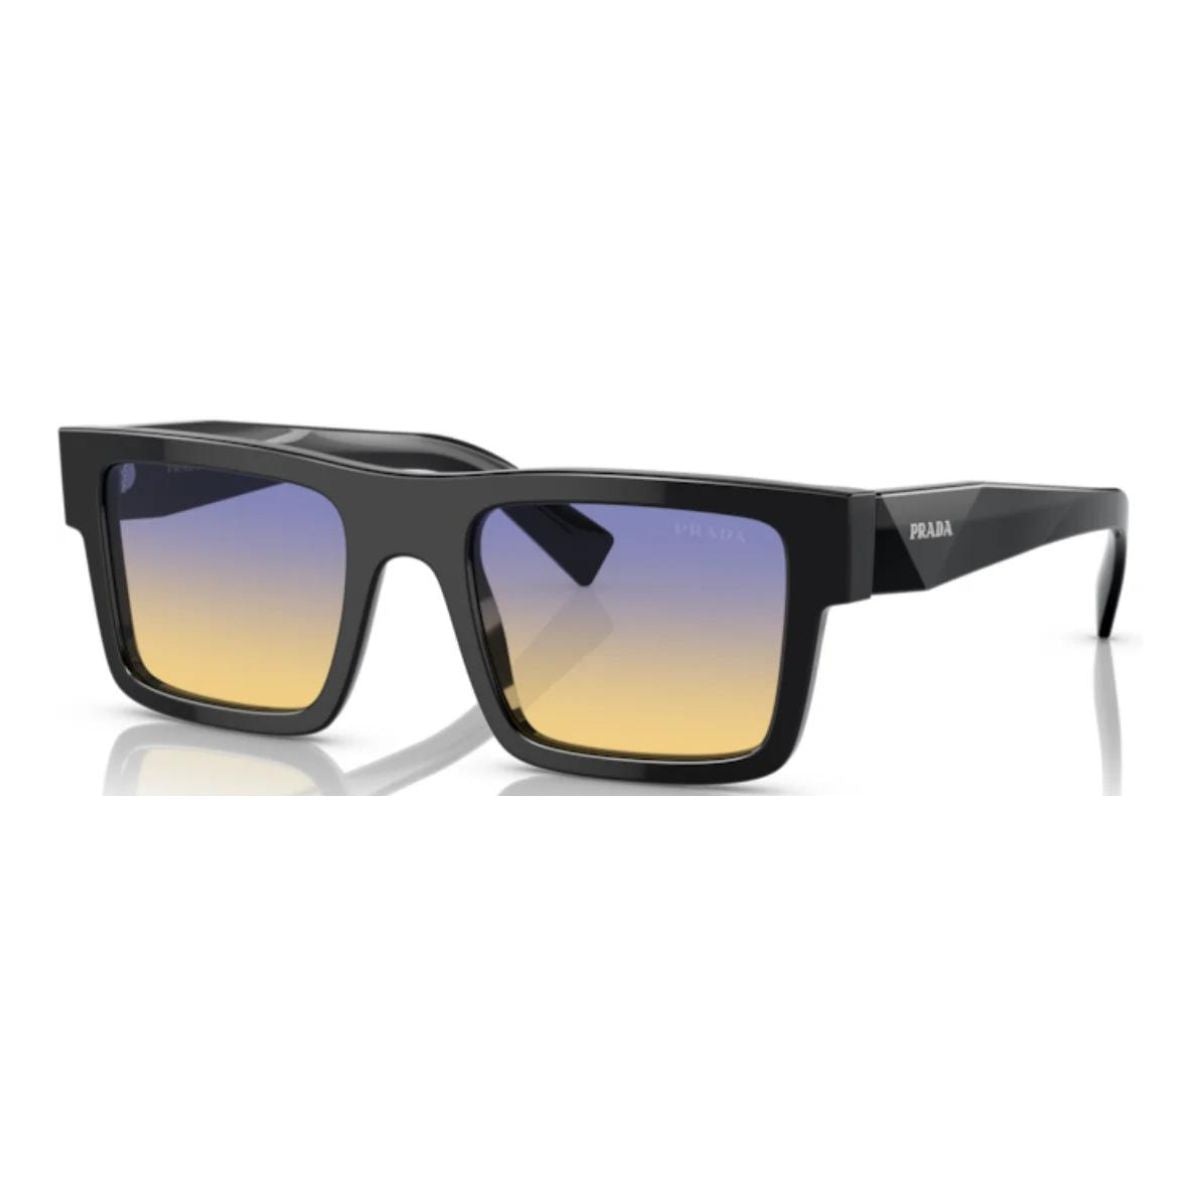 "Buy Prada SPR19W 1AB-06Z  Resistant Sunglasses For Men At Optorium""